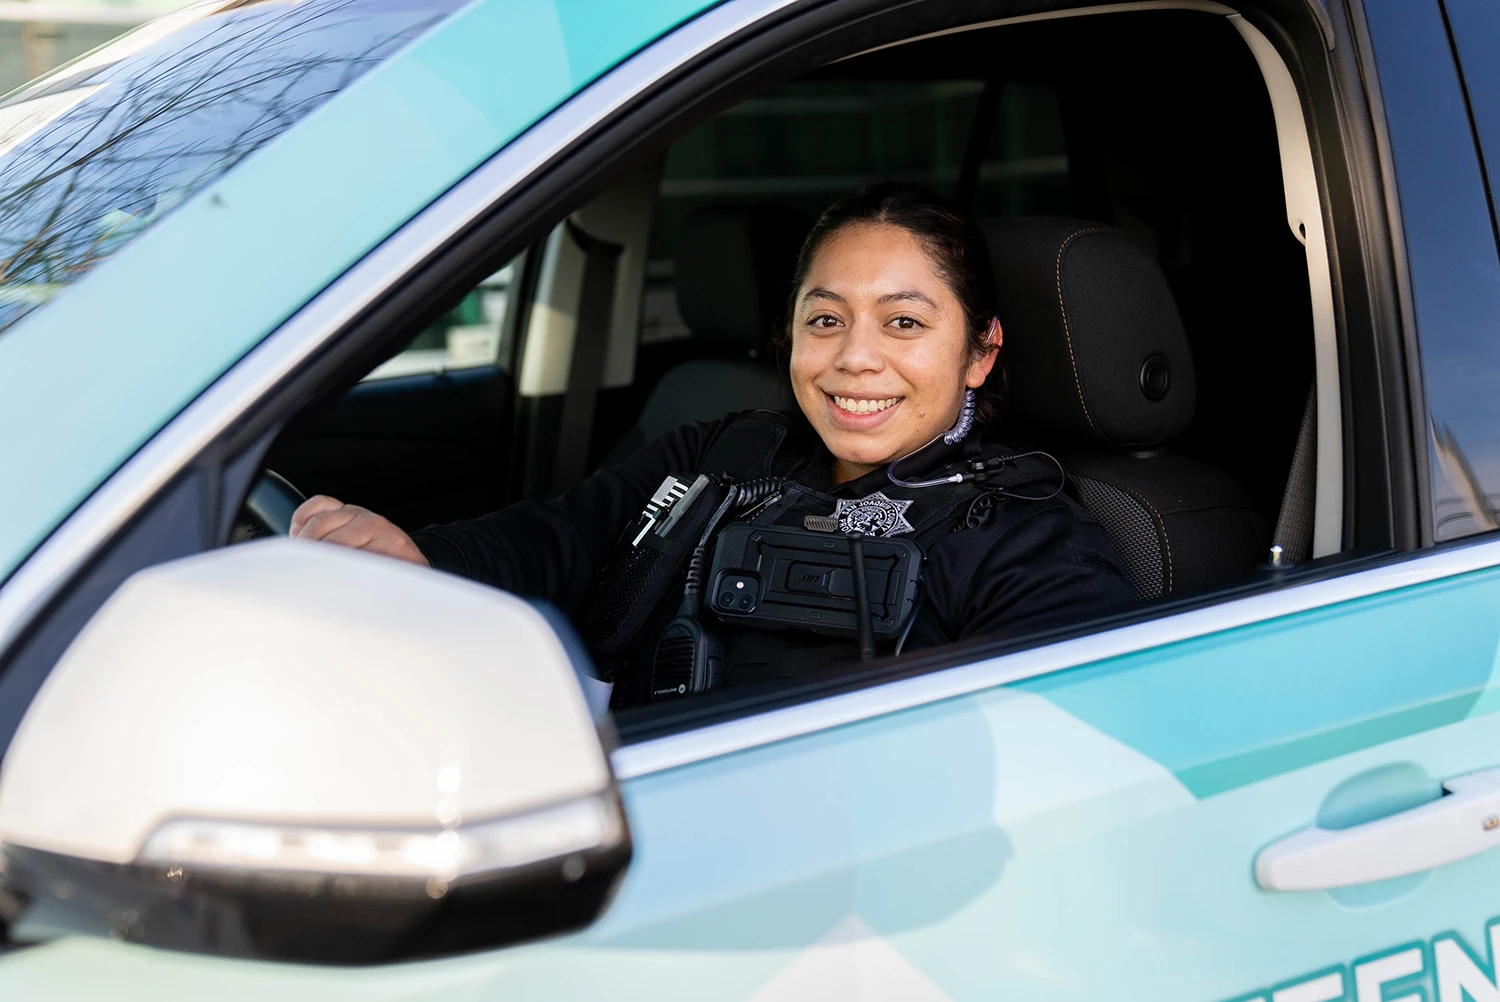 San Joaquin Probation Officer driving